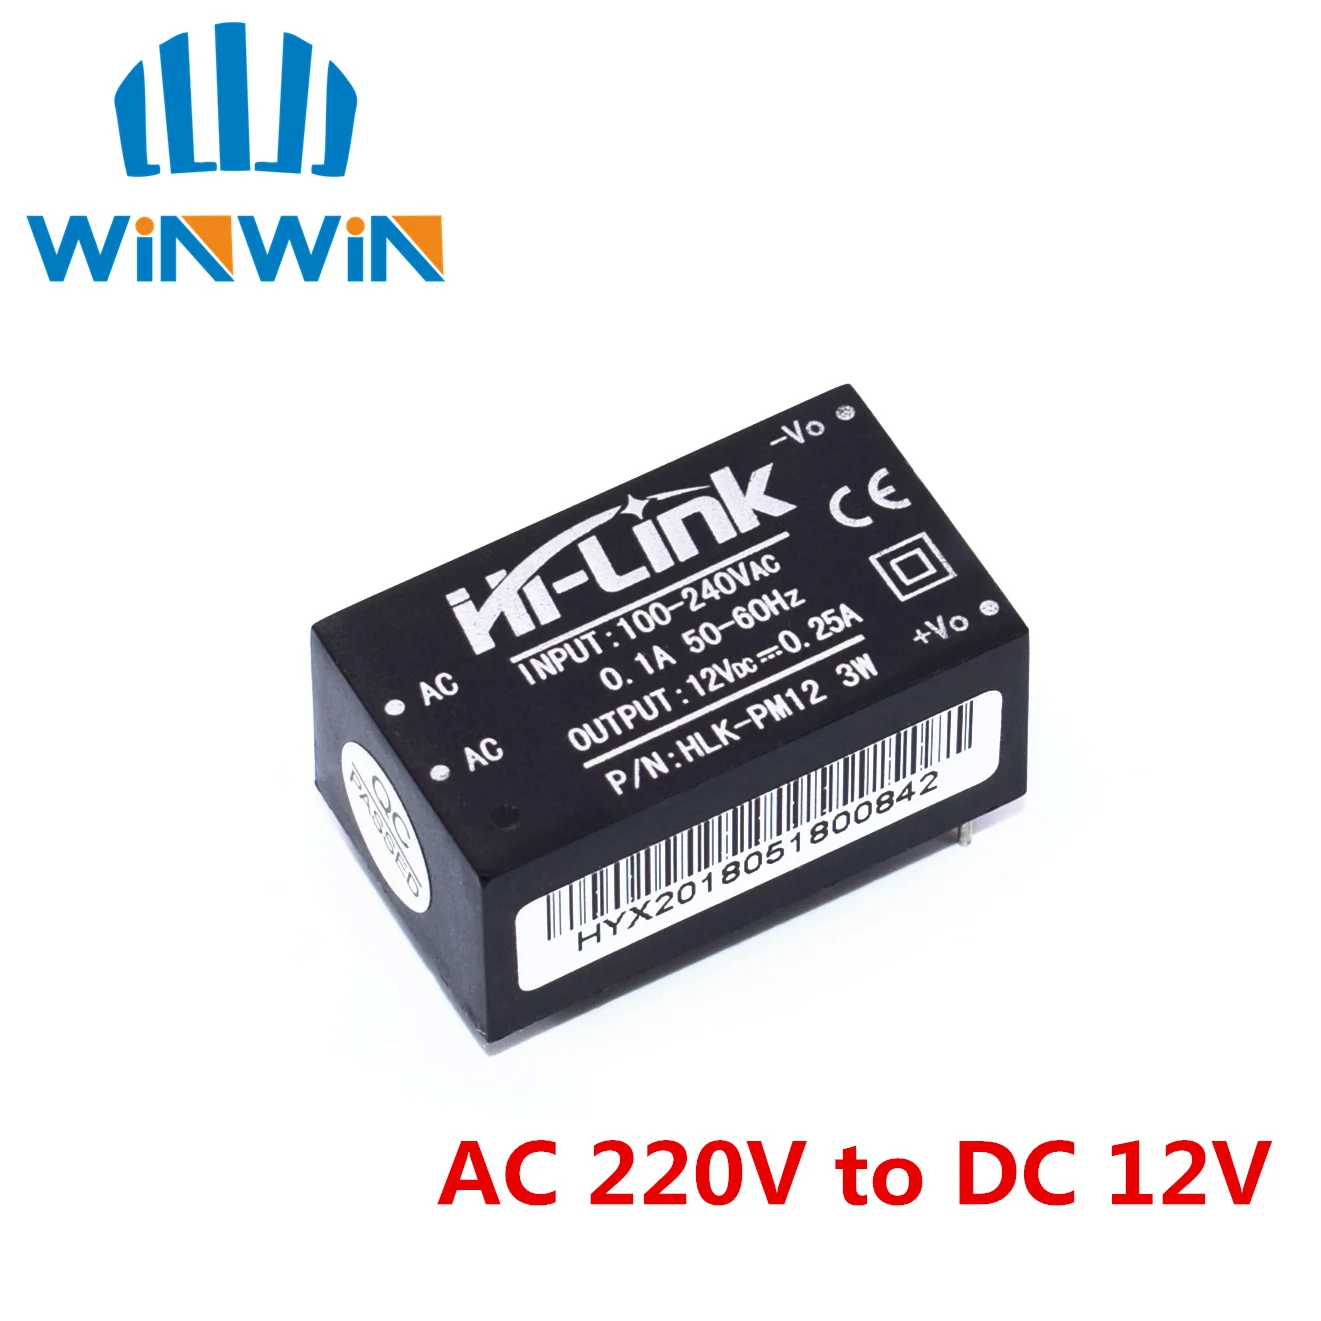 

HLK-PM12 AC-DC 220V to 12V Buck Step Down Power Supply Module Converter Intelligent Household Switch HLK-PM12 UL/CE